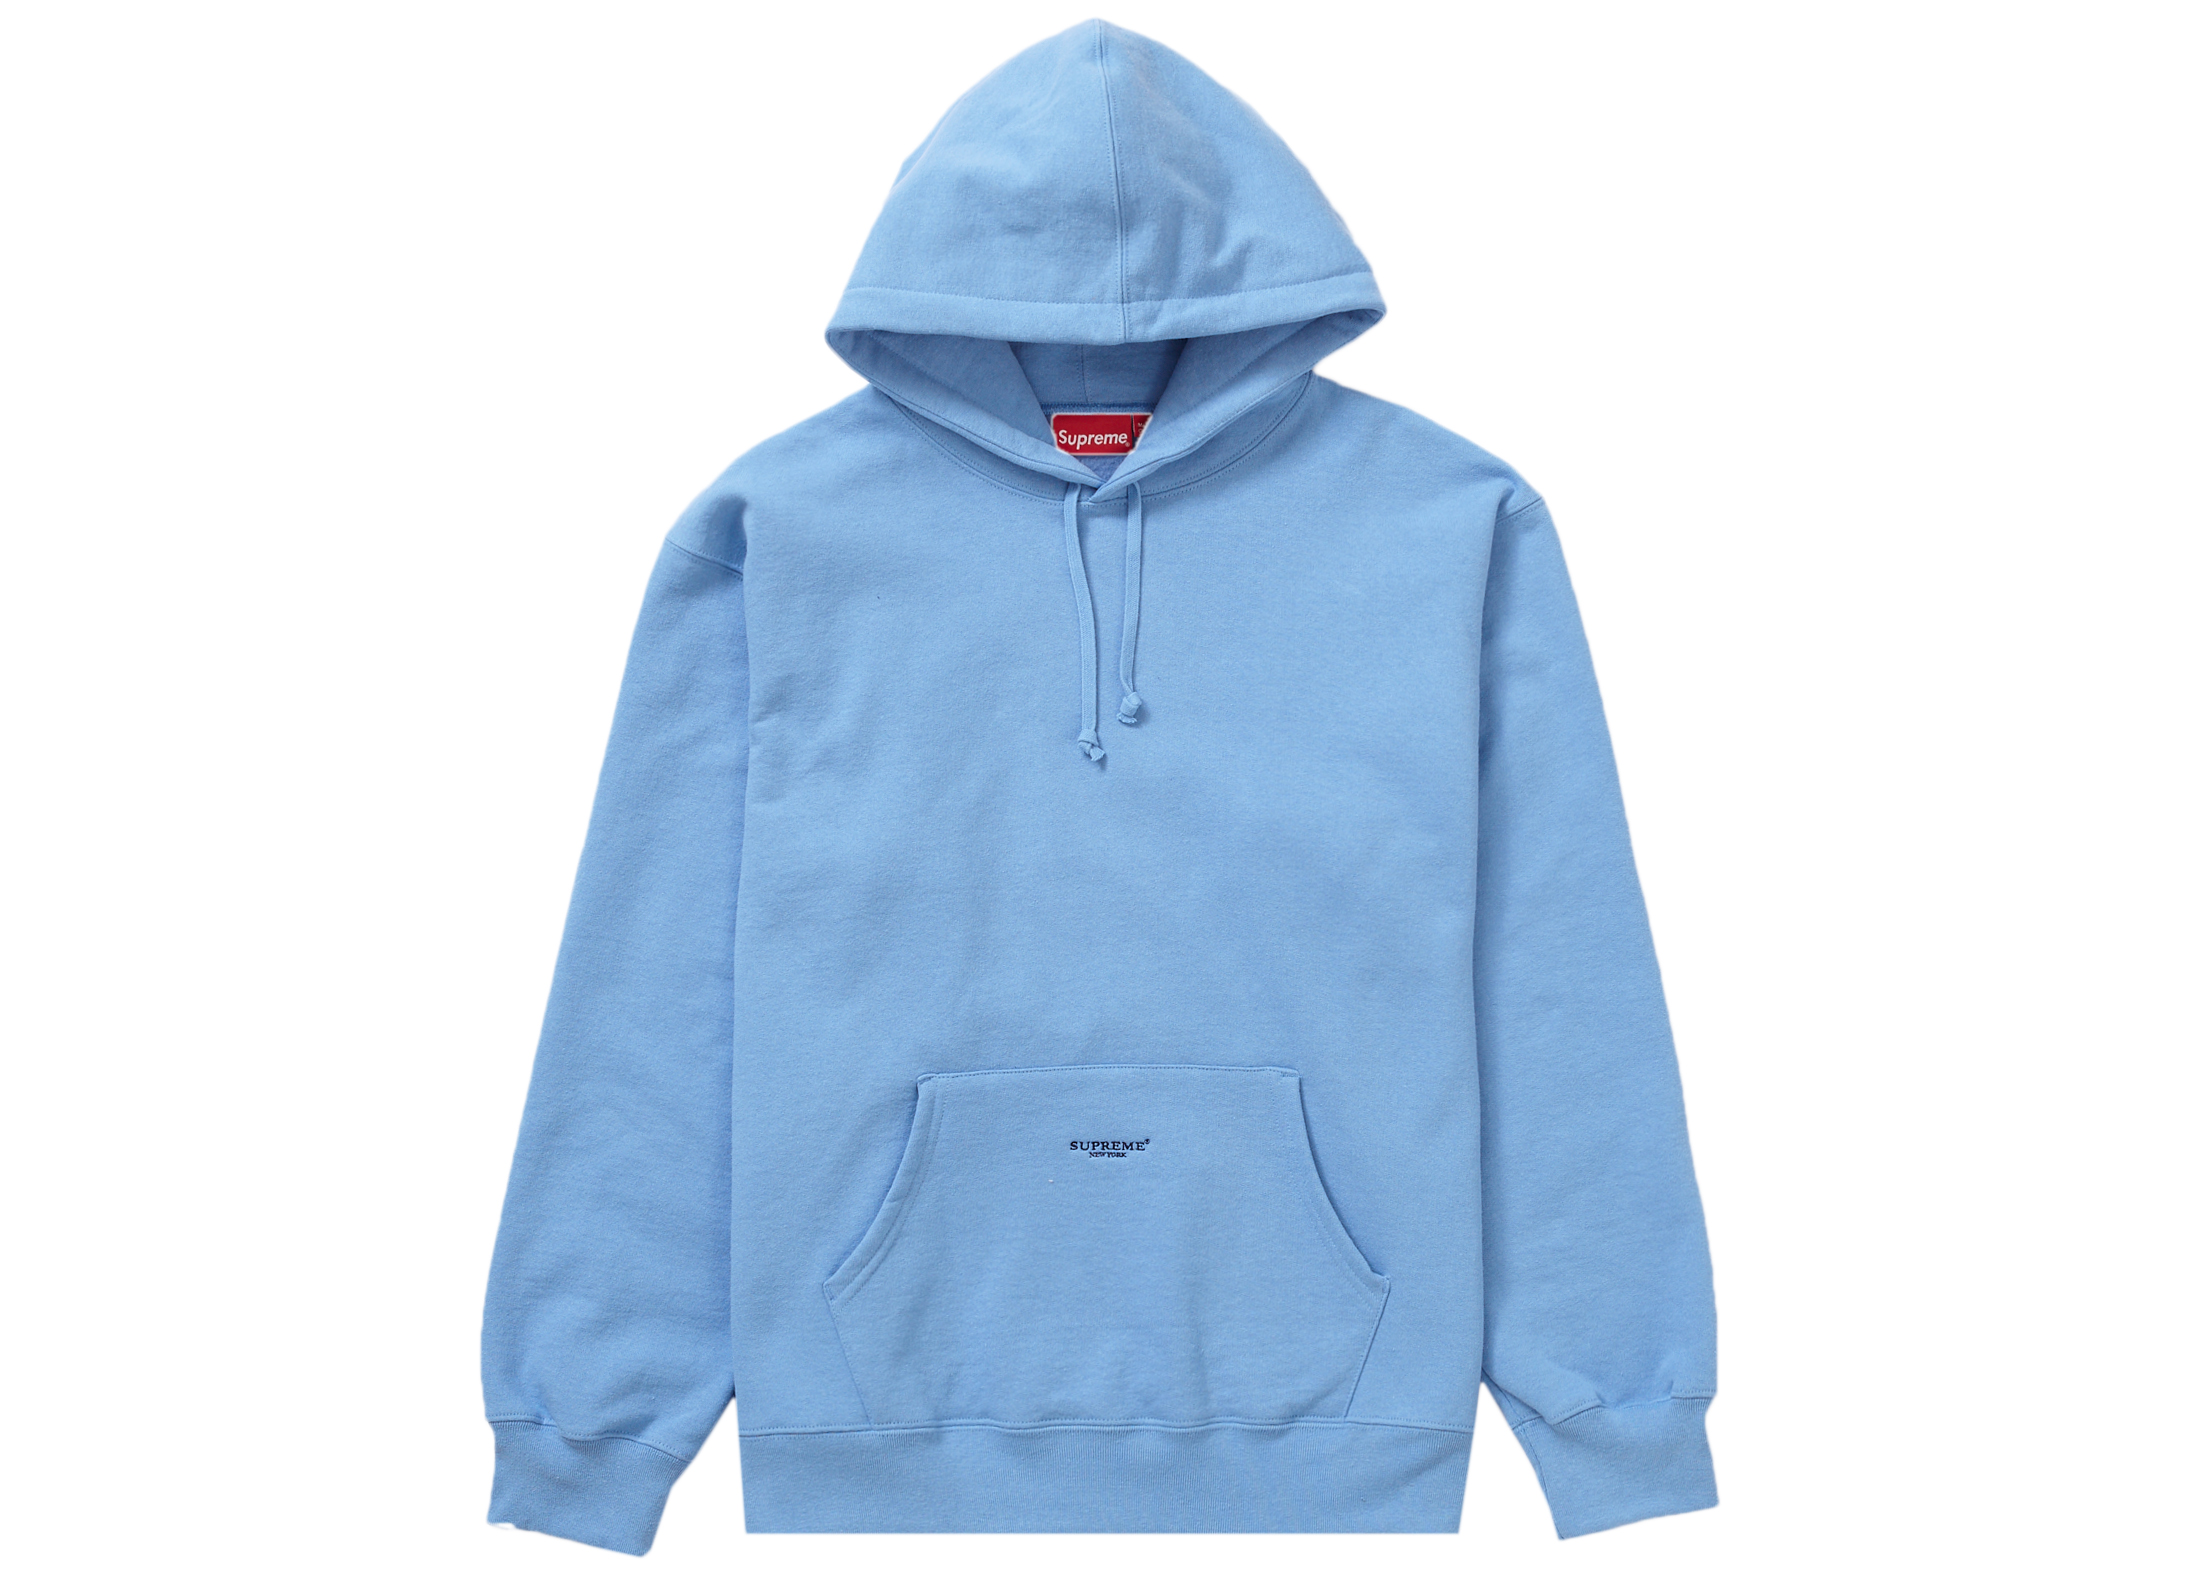 Supreme Hooded Sweatshirt Light Blueメンズ